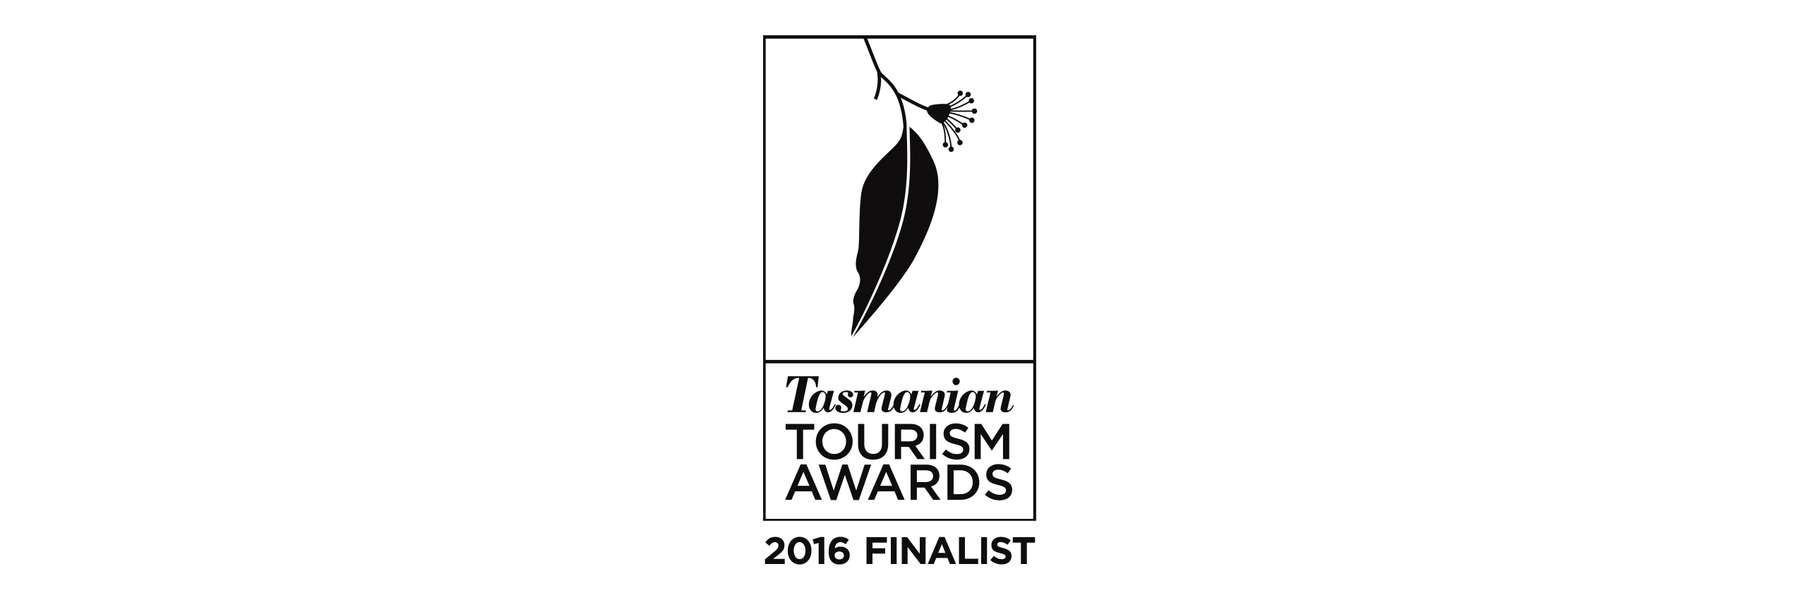 Logo tourism awards finalist 2016